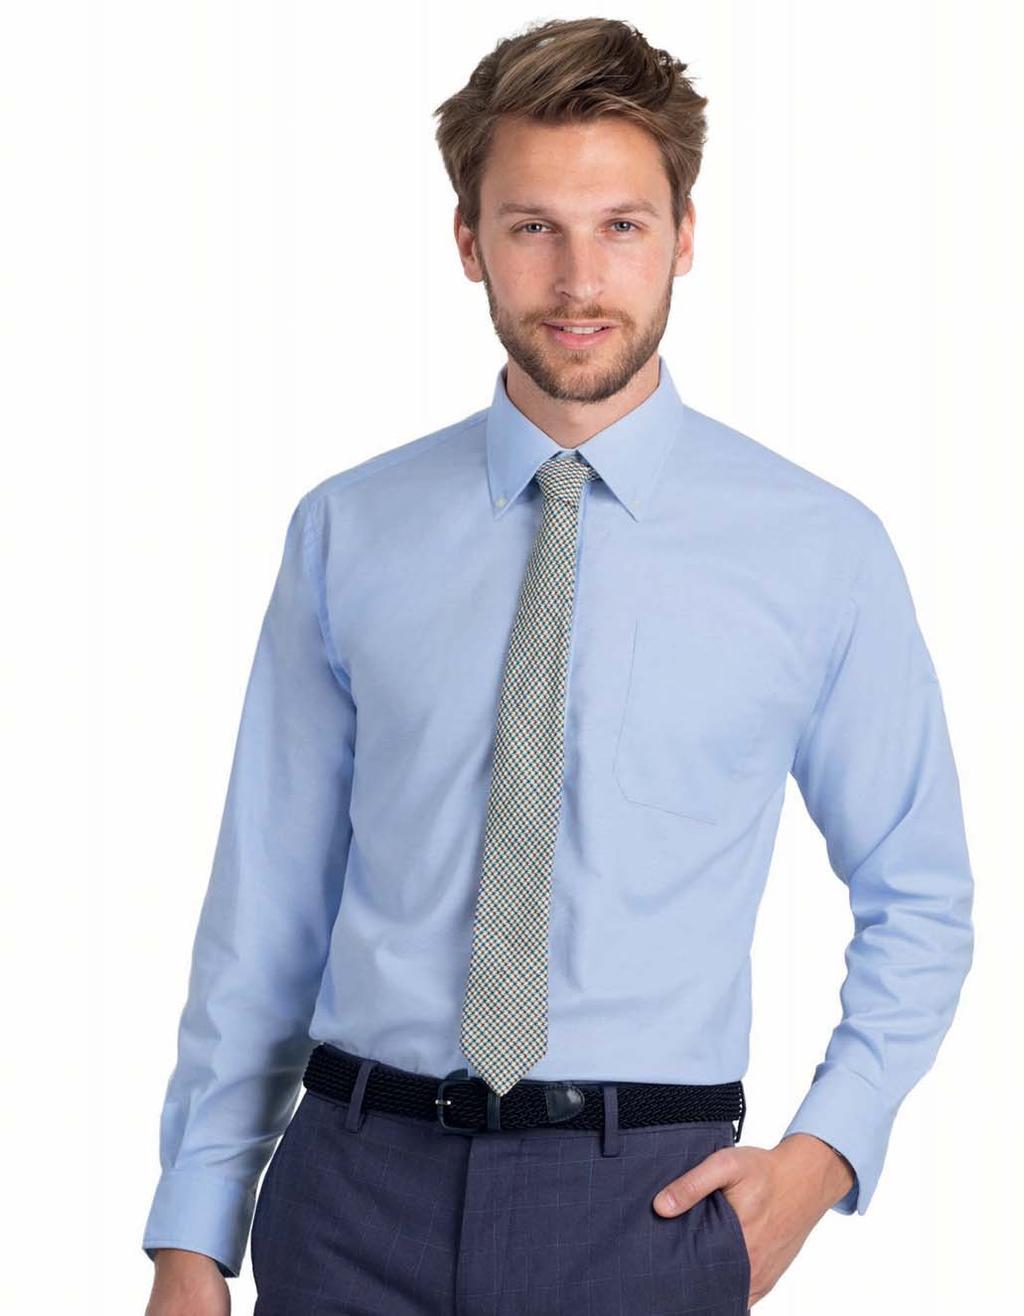 BUSINESS (HEMDEN & BLUSEN /OXFORD) BCSMO01 SMO01 Shirt Oxford Long Sleeve /Men 70% Baumwolle / 30% Polyester S, M, L, XL, XXL, 3XL, 4XL, 5XL, 6XL 135 g/m² BLUE CHIP OXFORD BLUE SILVER MOON (HEATHER)